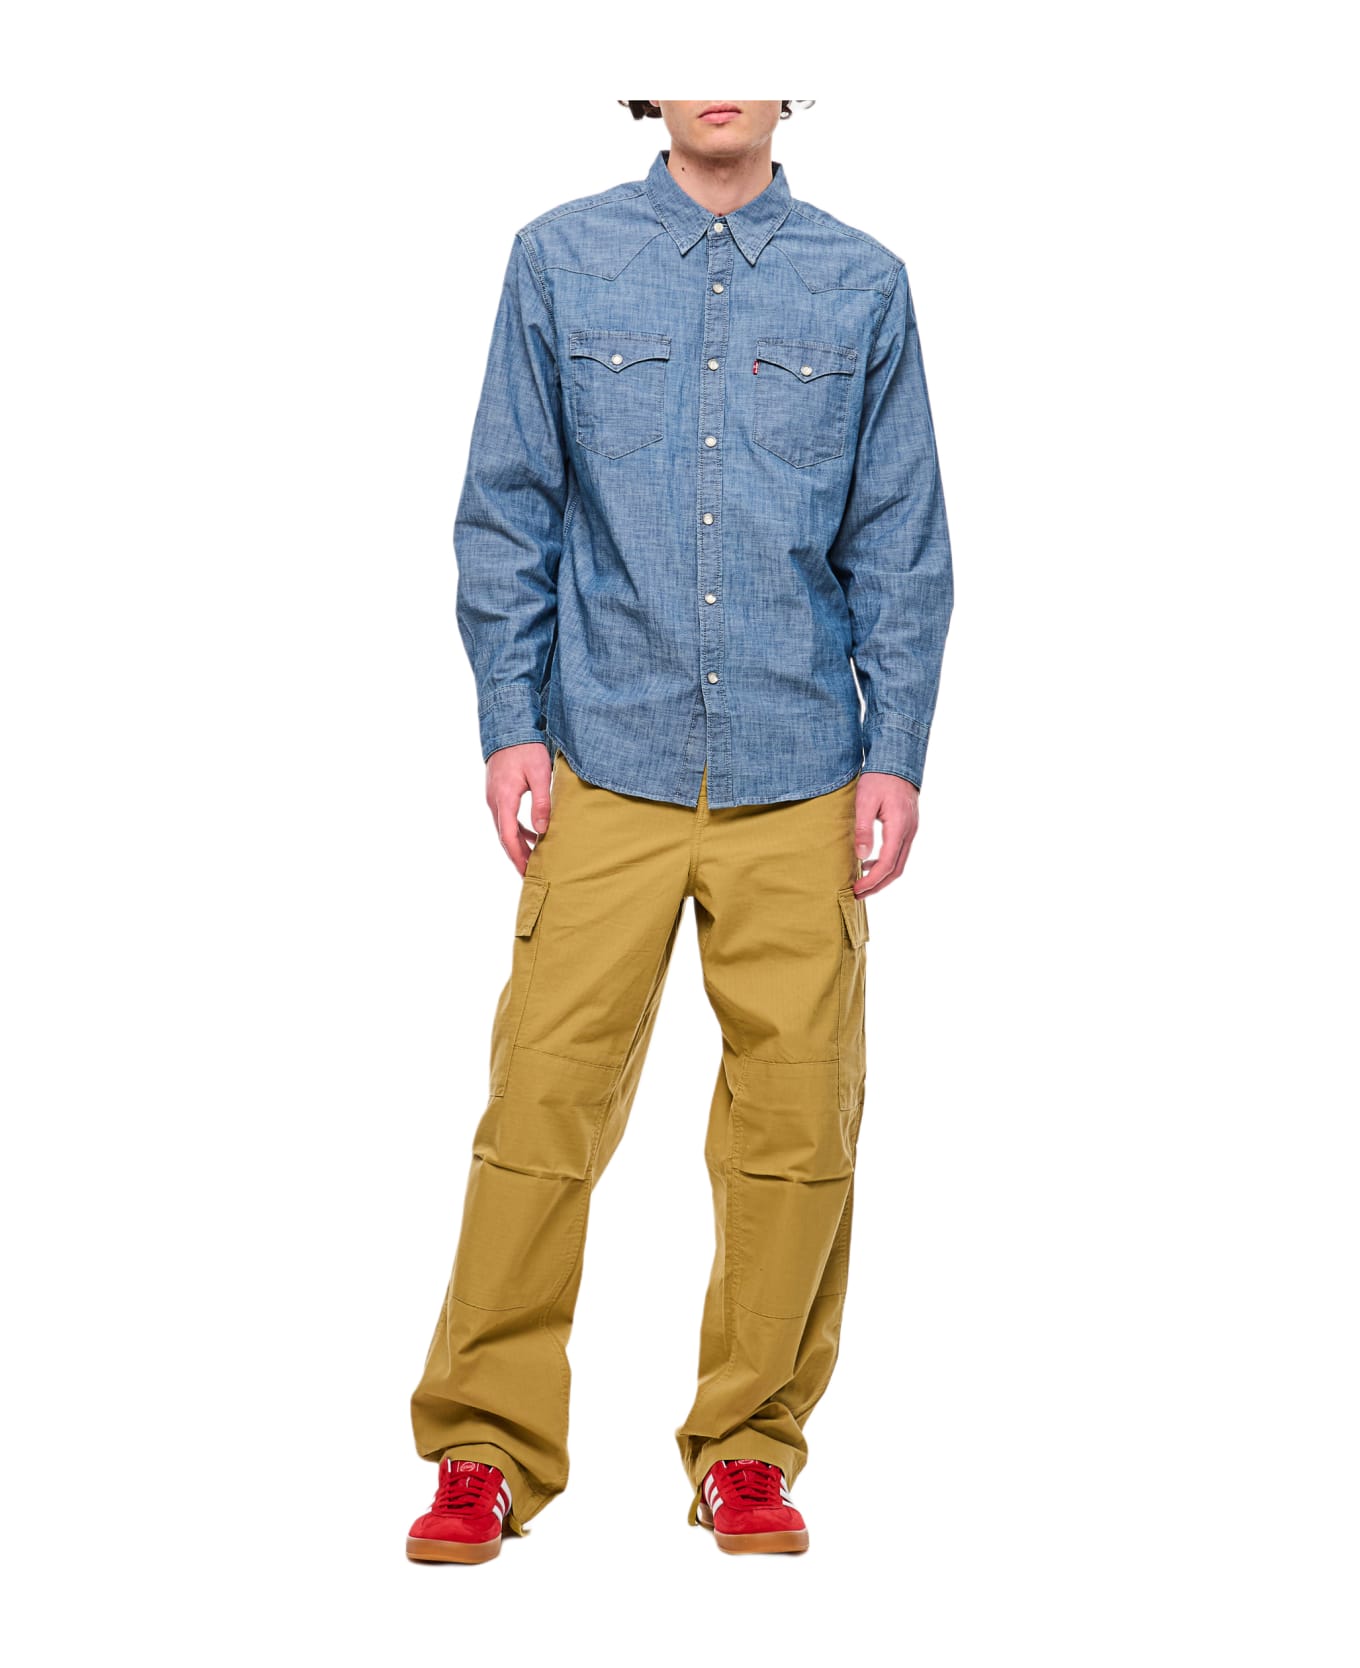 Levi's Bartsow Standard Shirt - Blue シャツ